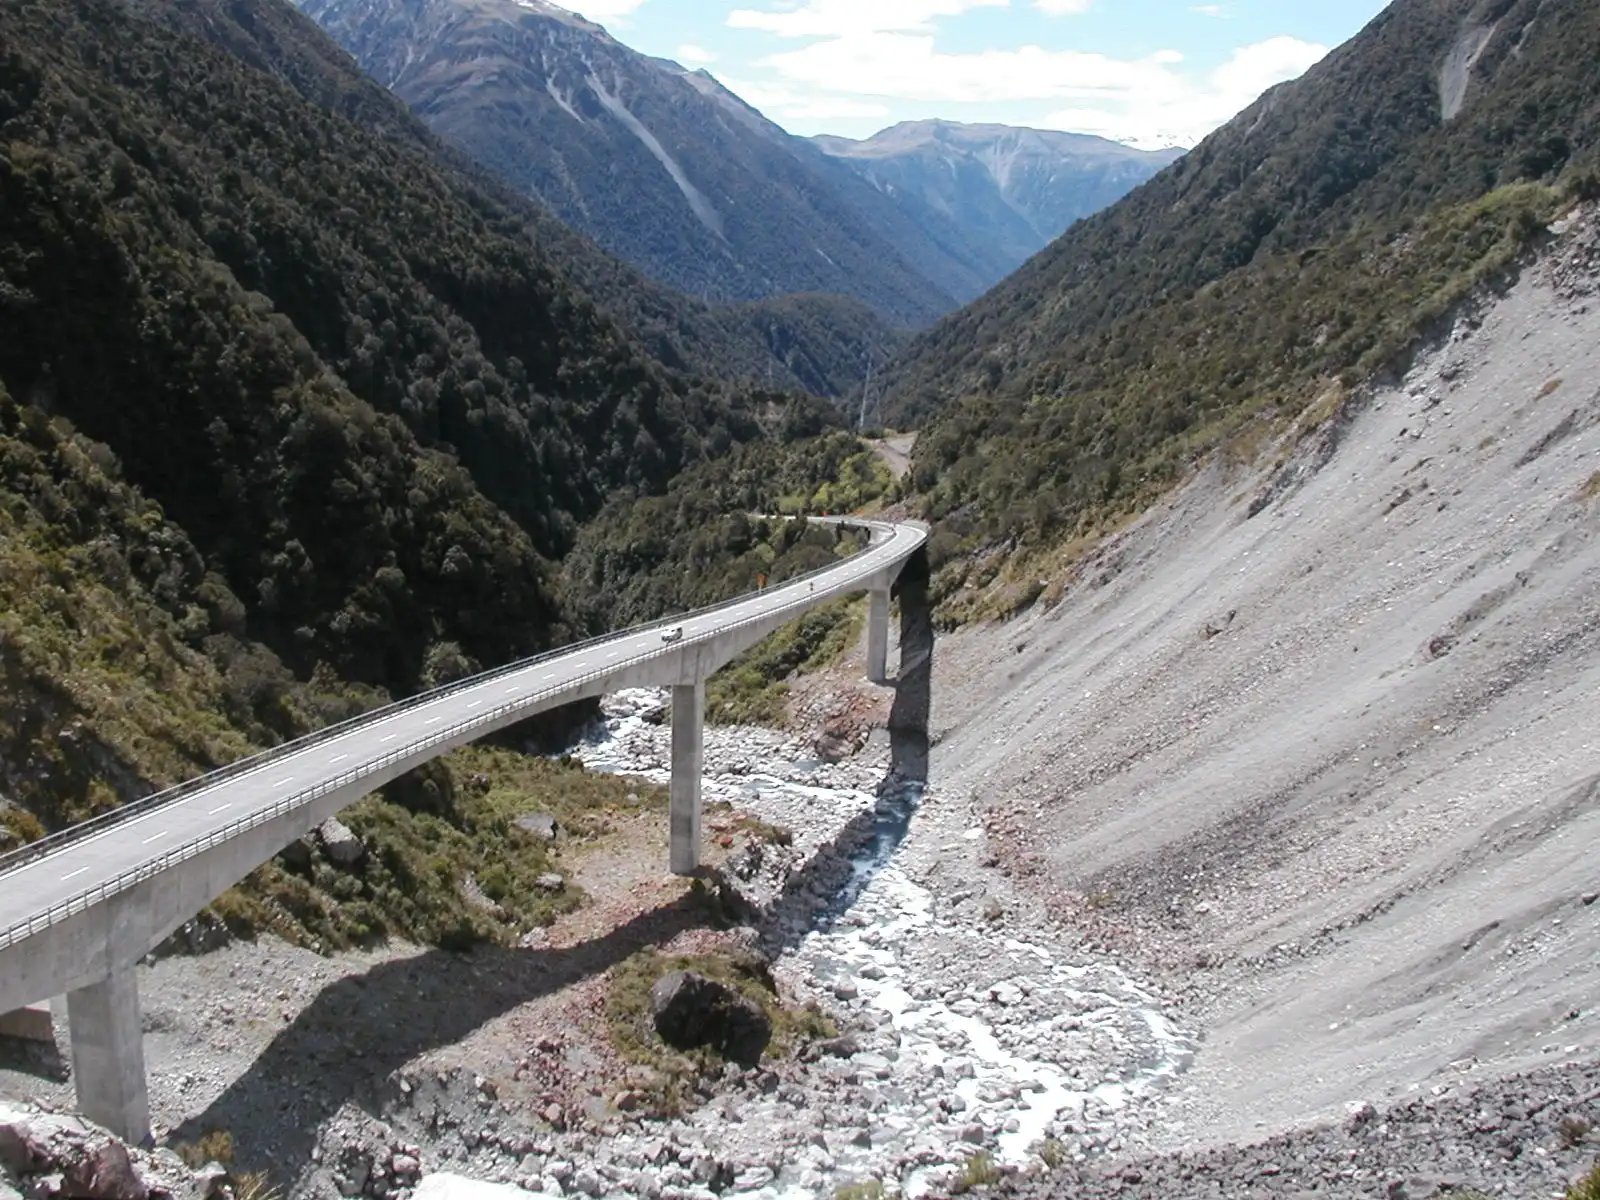 Arthur's Pass new zealand - Scenic Drives in New Zealand